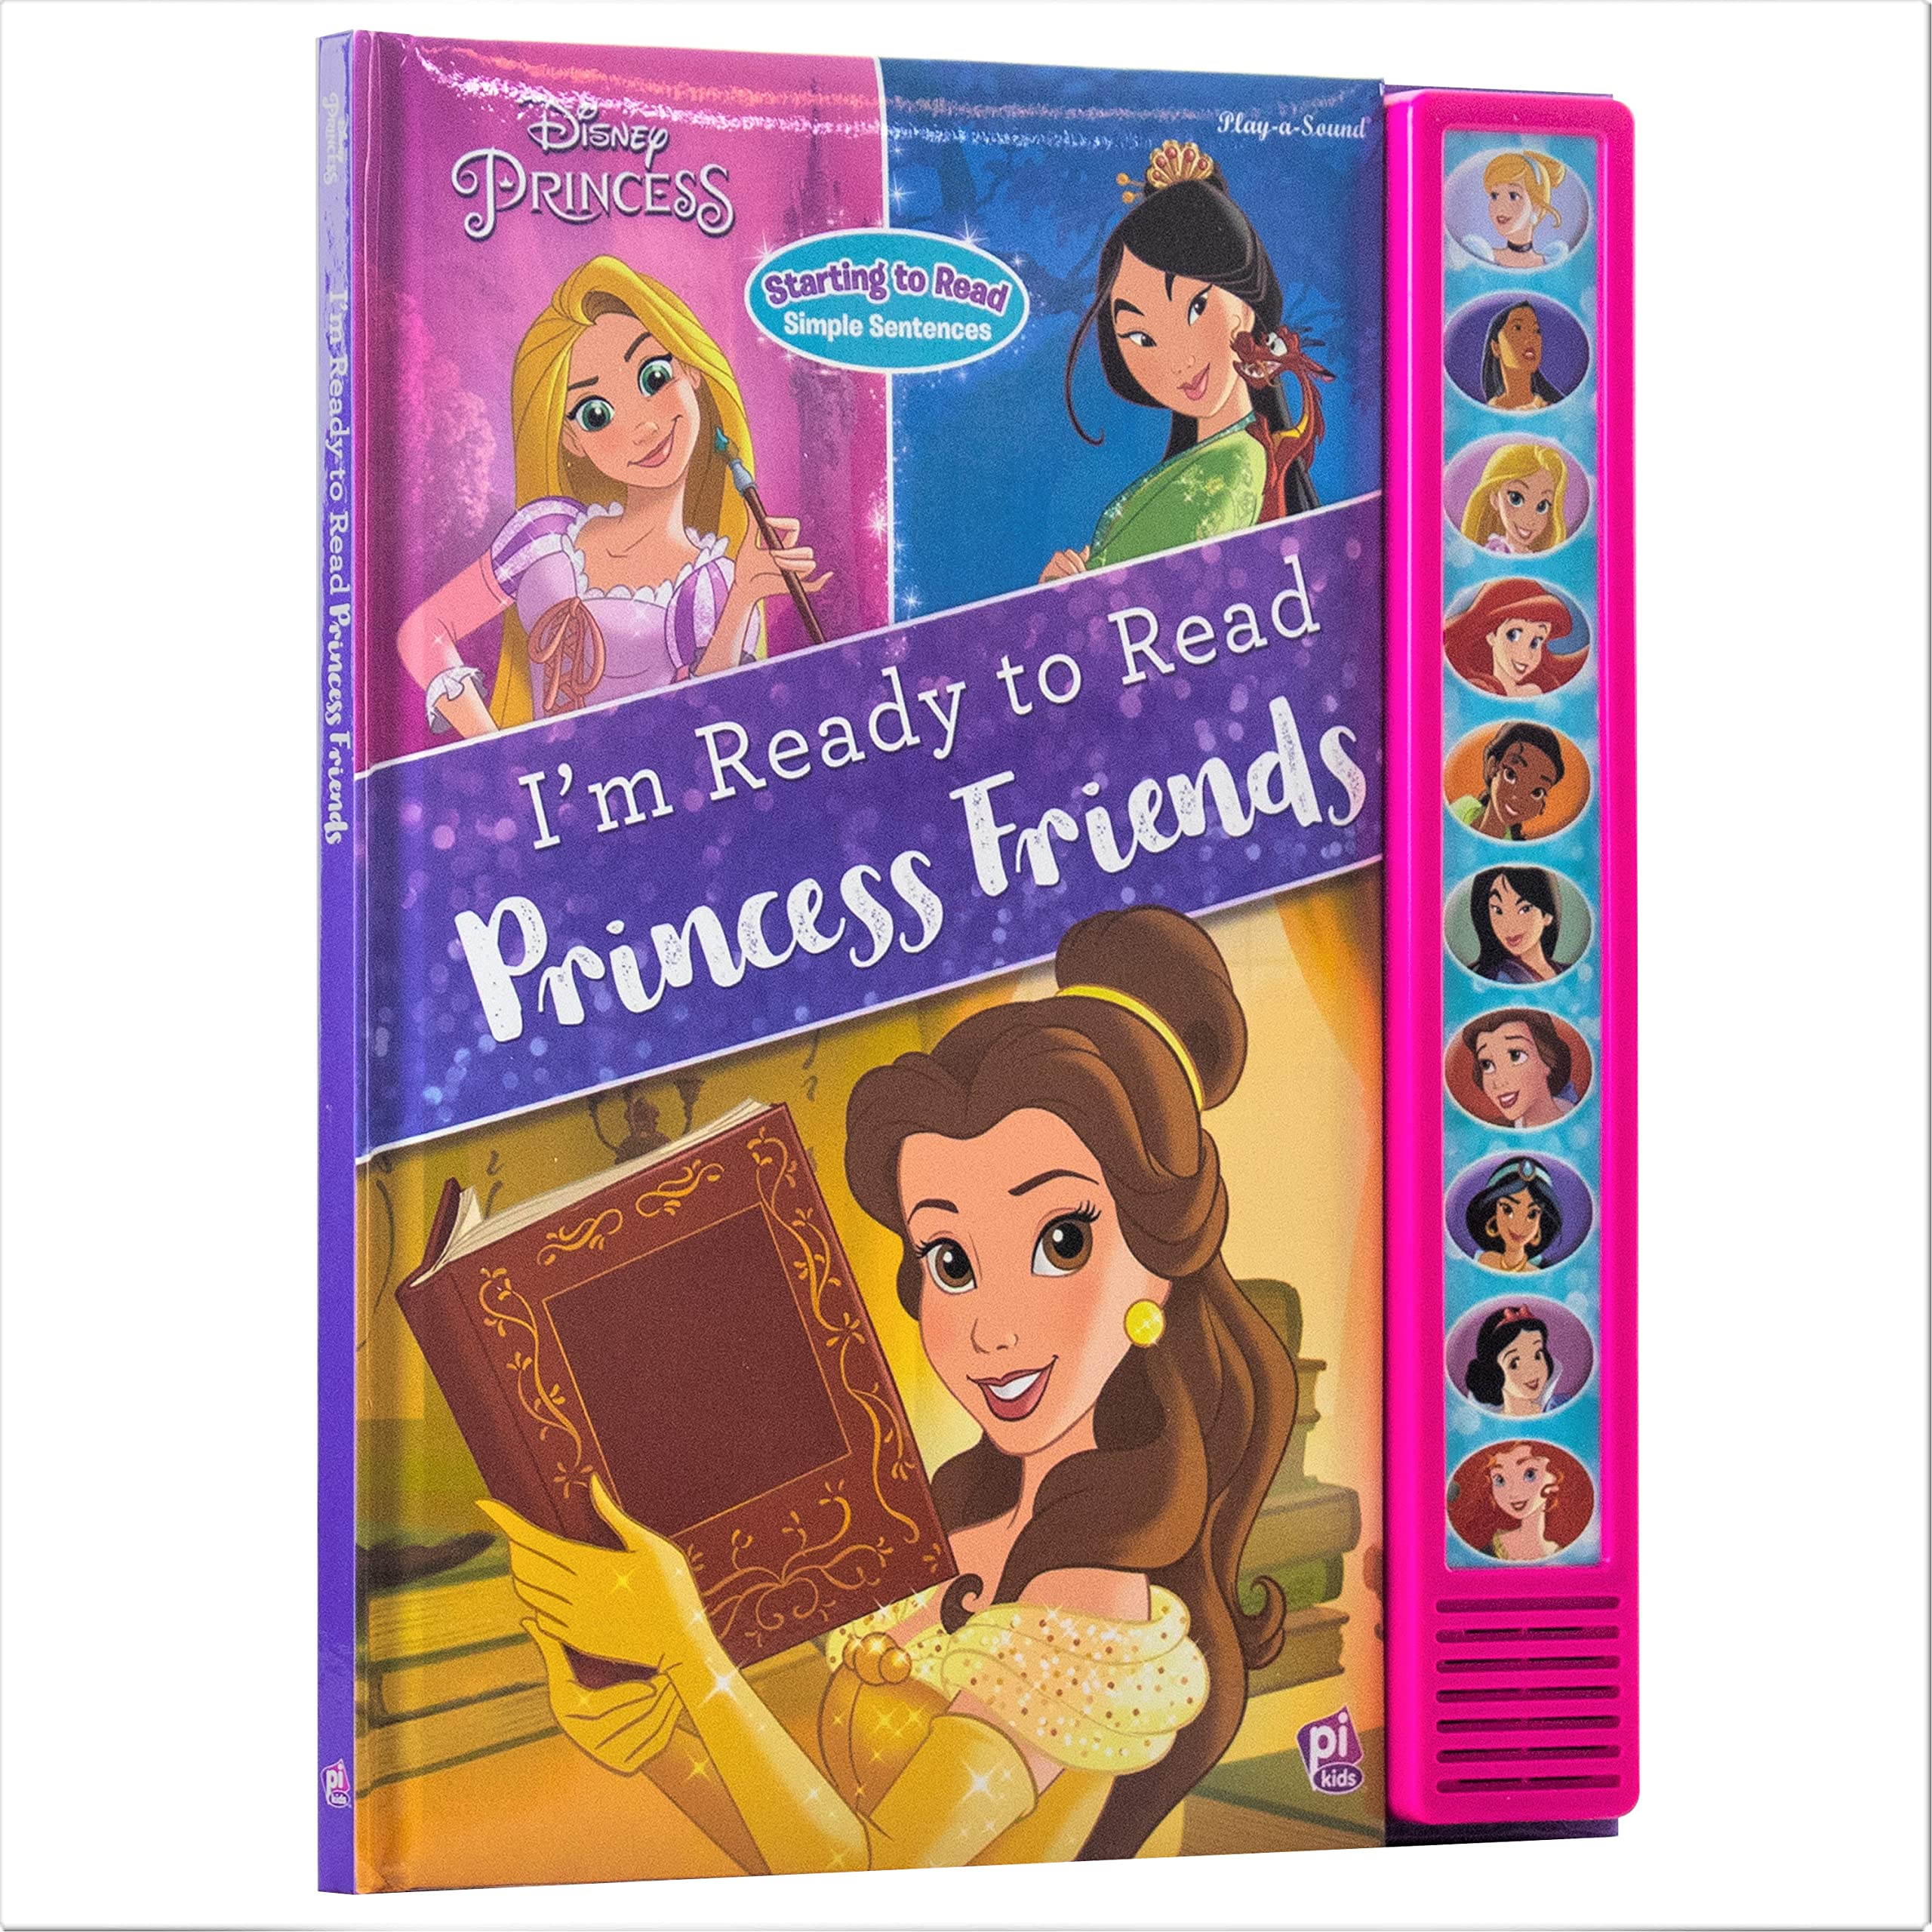 Disney Princess Belle, Mulan, Cinderella, Rapunzel, and More! - I'm Ready to Read Princess Friends Sound Book